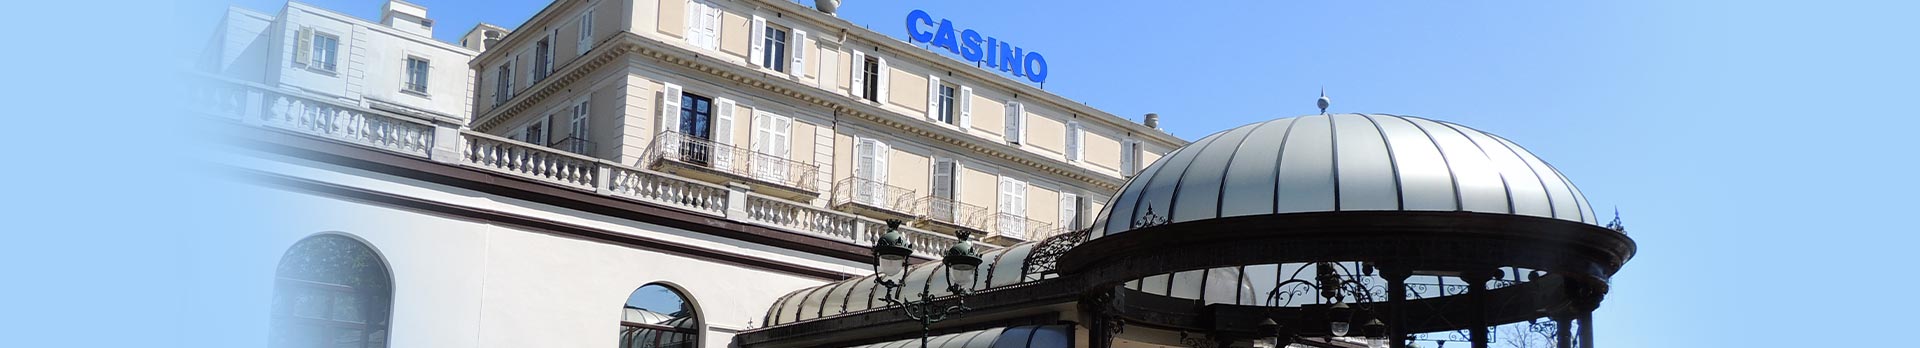 Casino de Divonne